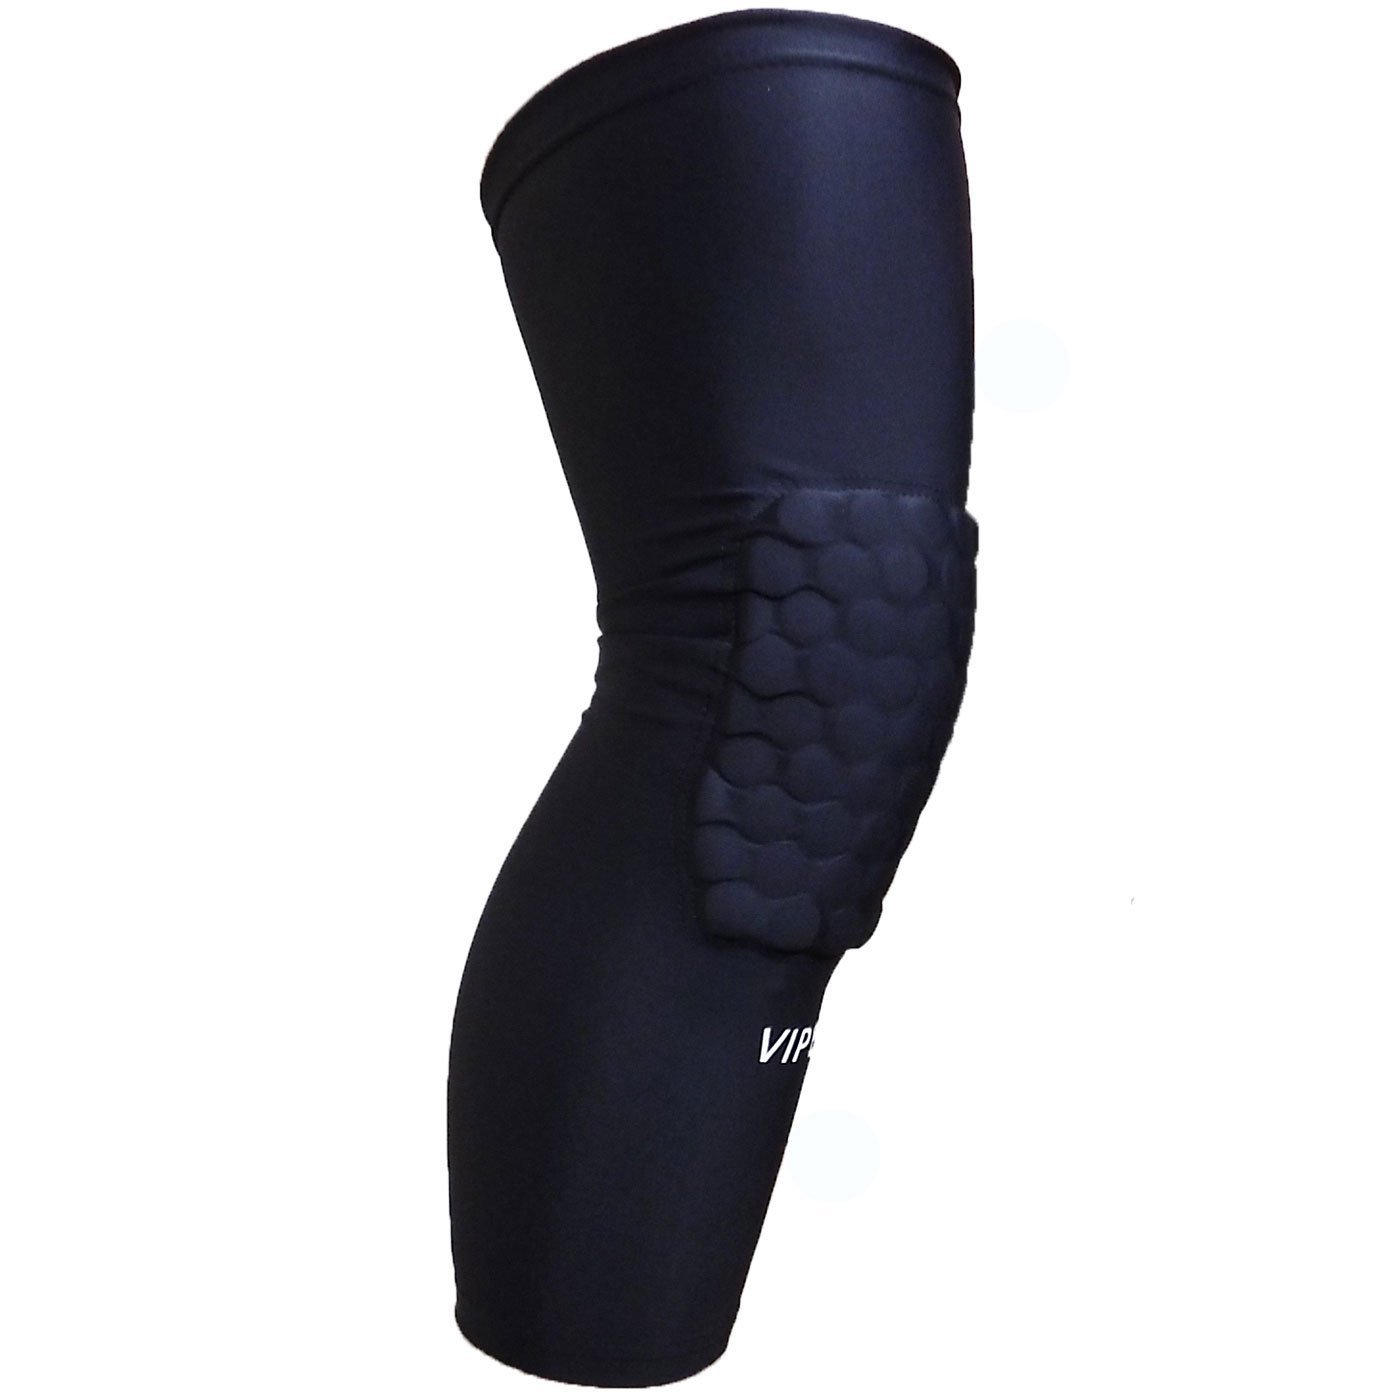 VIPER Compression Sleeve Knee Pad